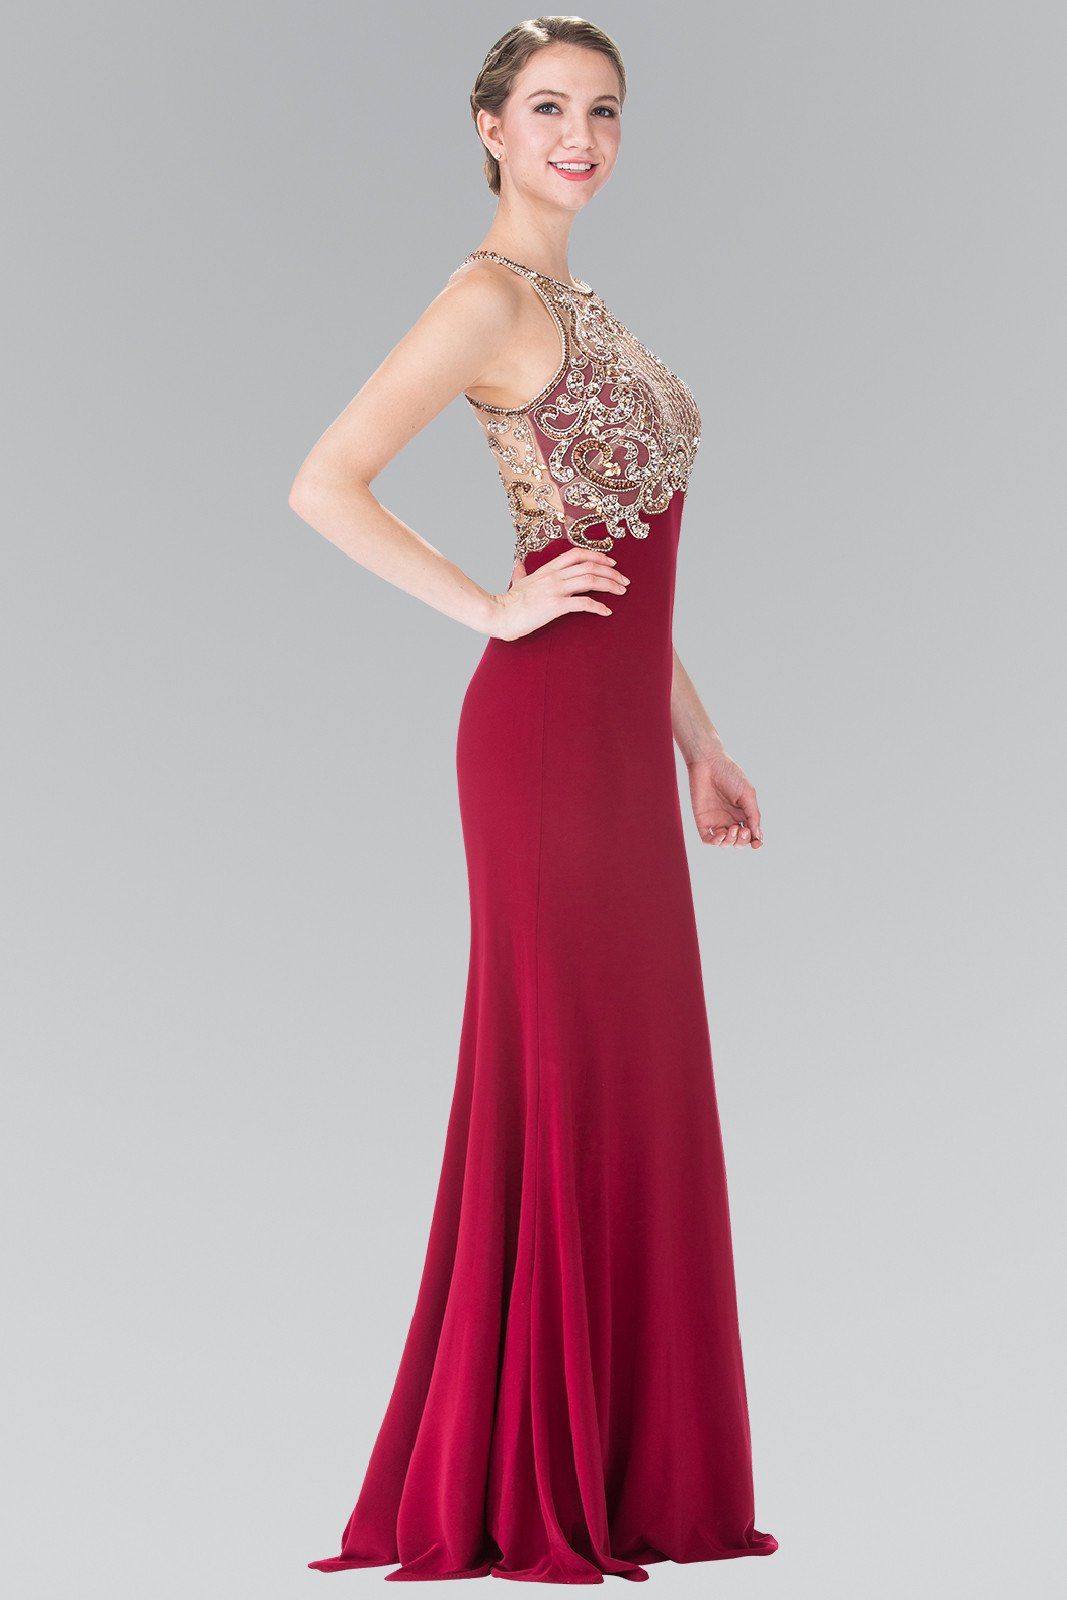 Long Sleeveless Beaded Illusion Dress by Elizabeth K GL1303-Long Formal Dresses-ABC Fashion